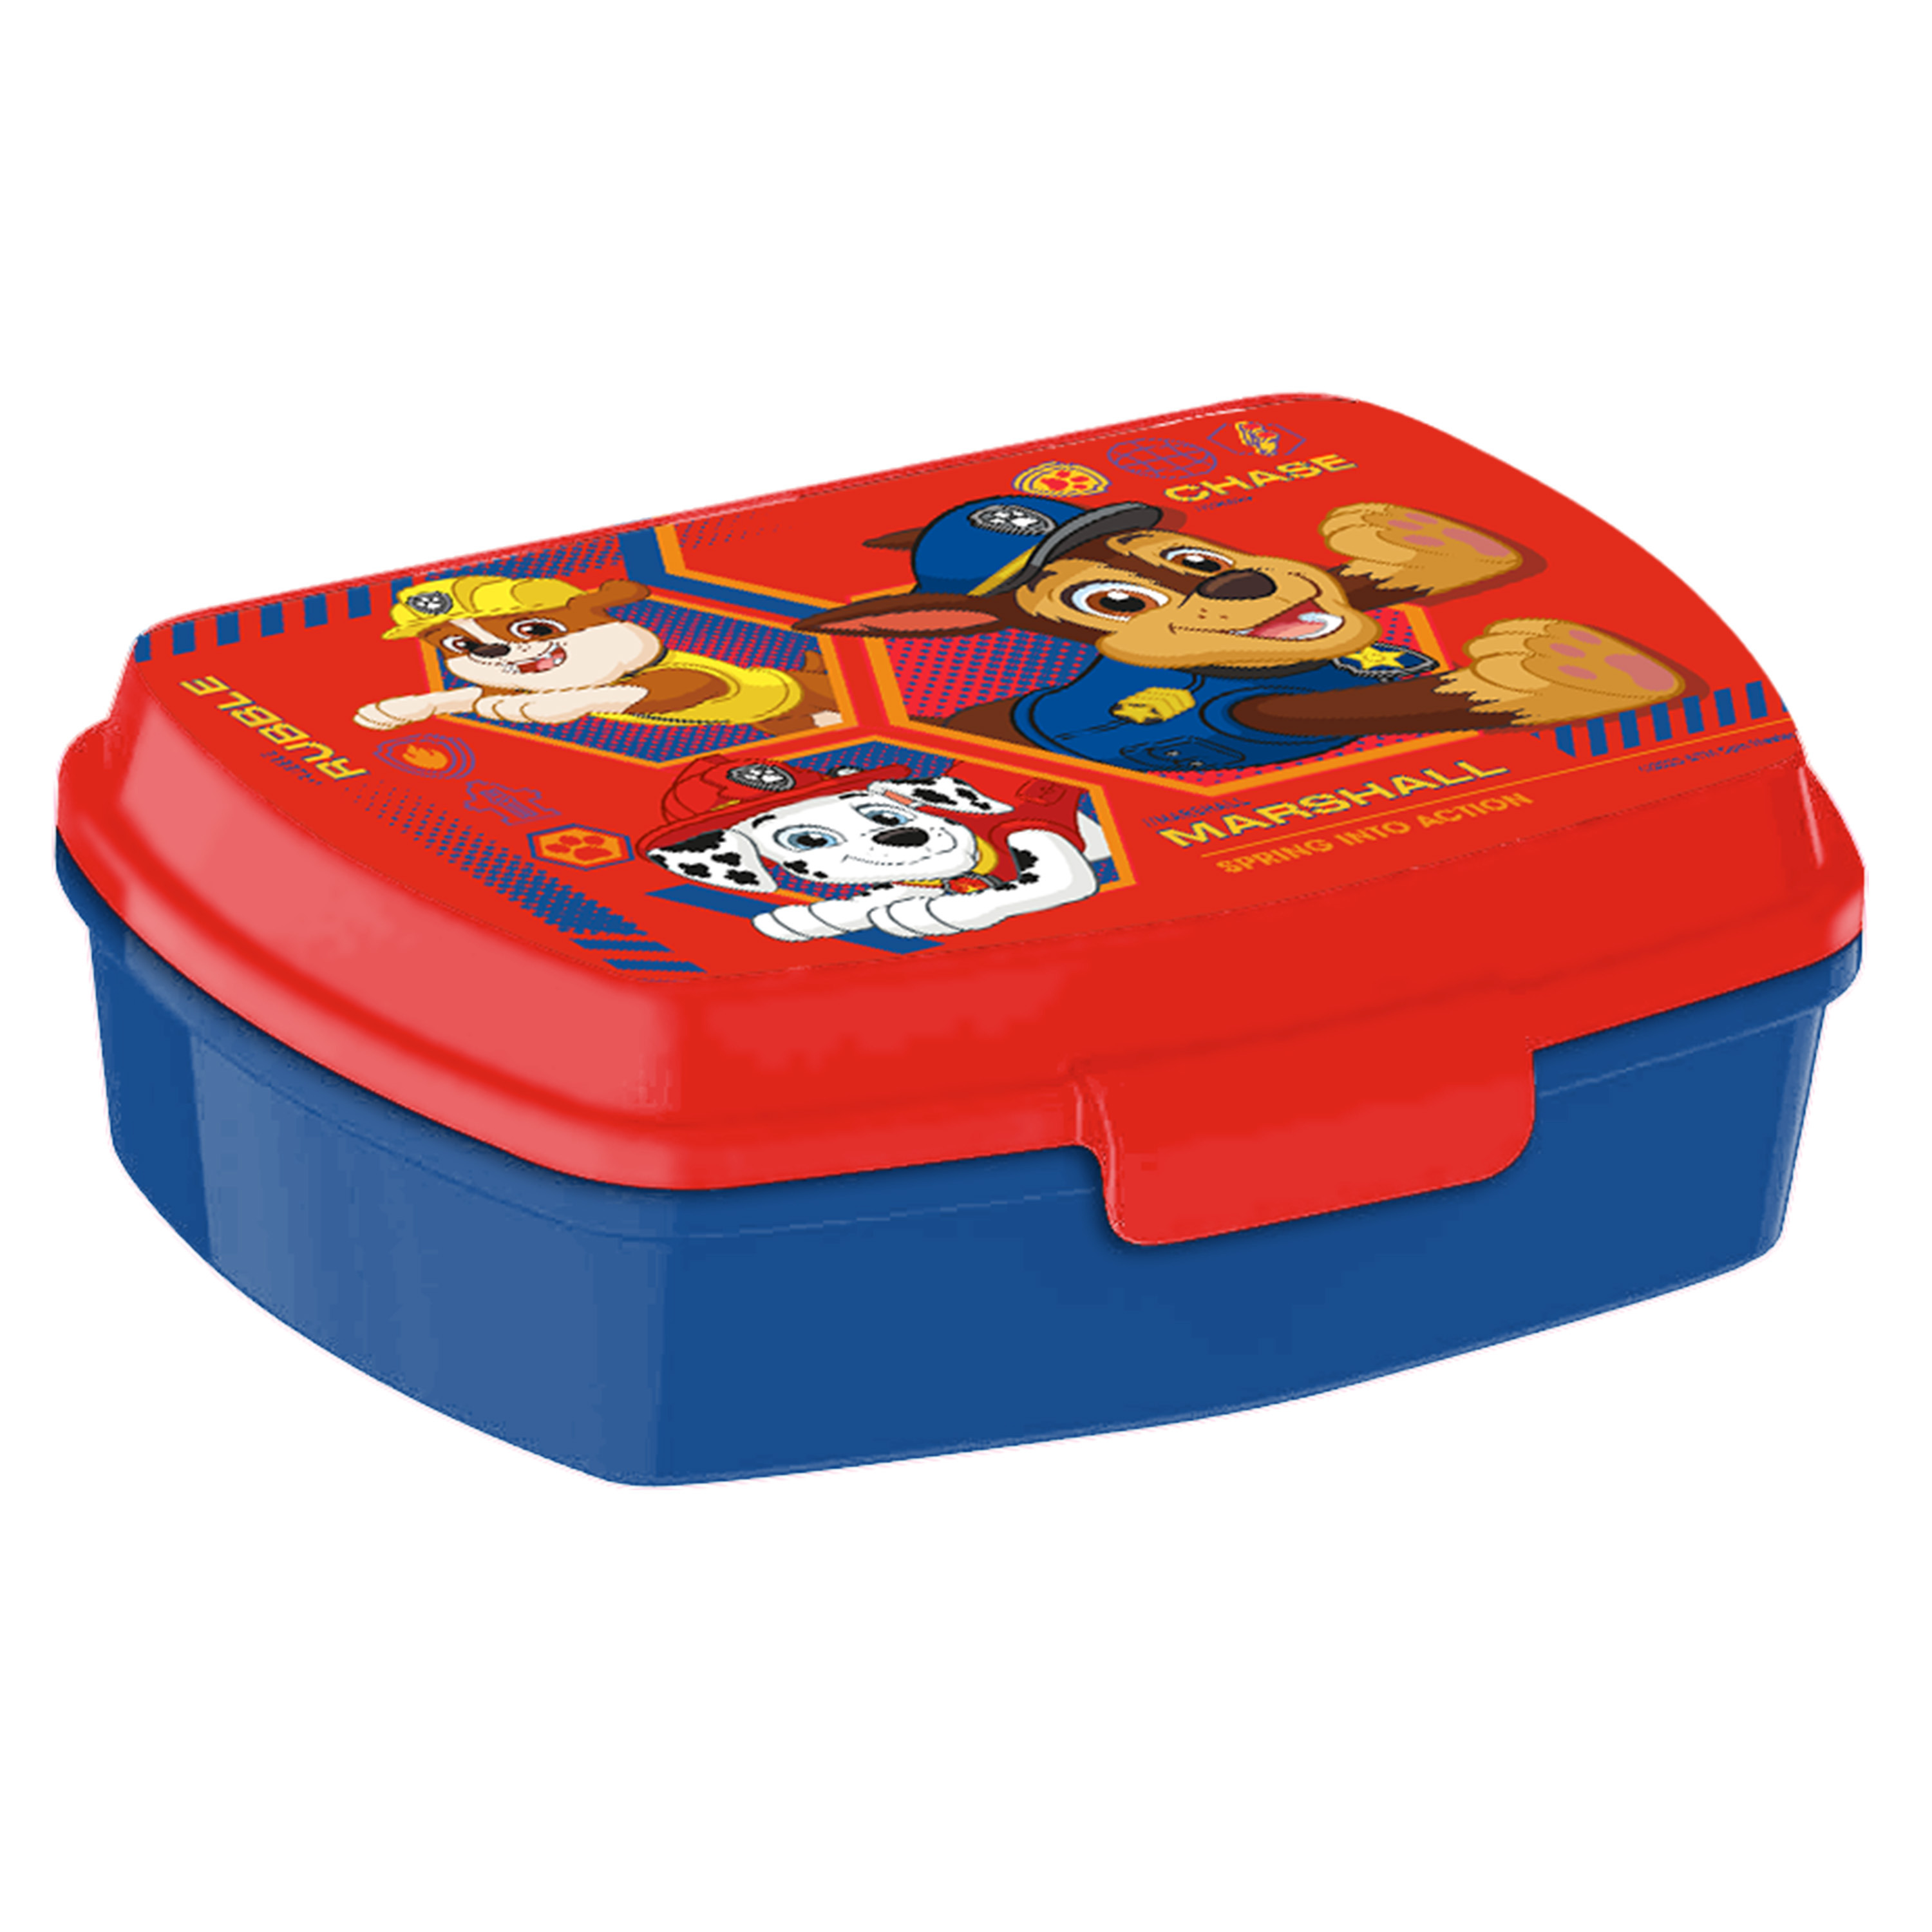 Paw Patrol broodtrommel-lunchbox voor kinderen rood kunststof 20 x 10 cm